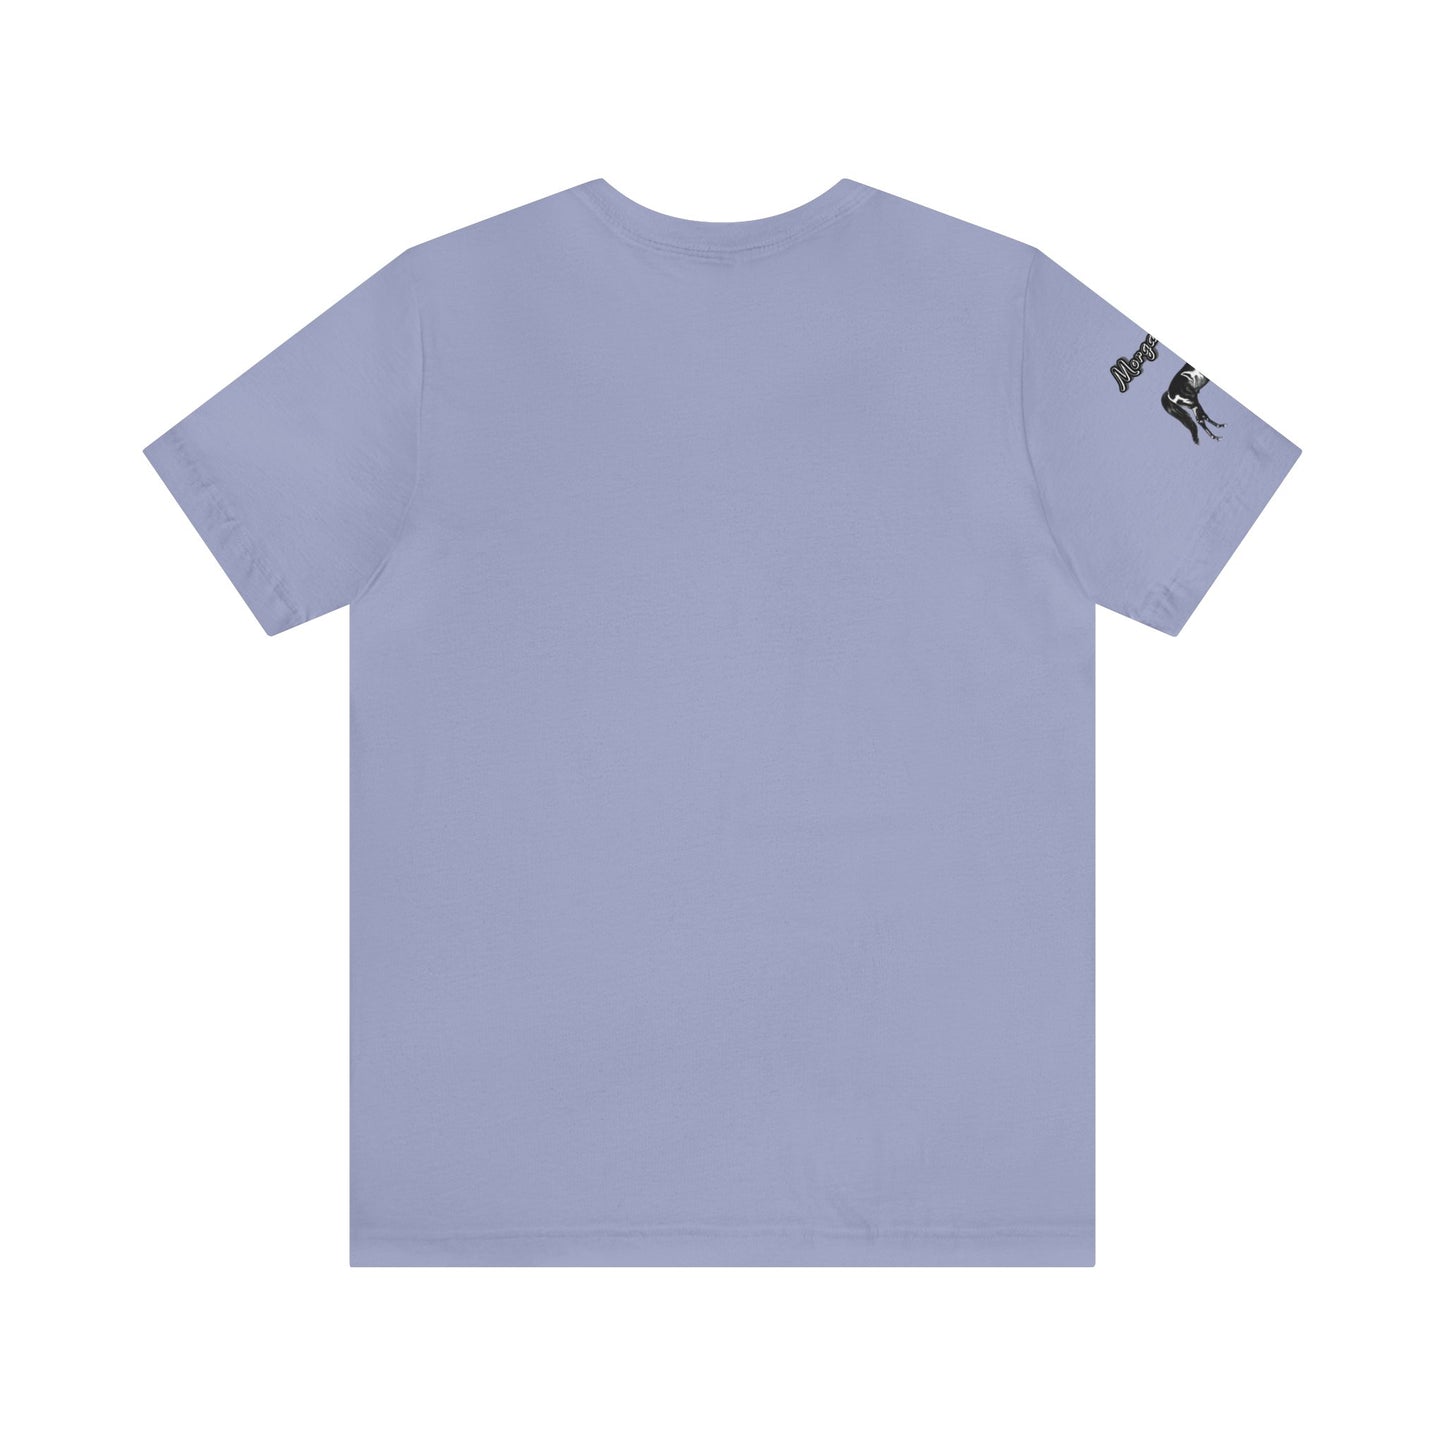 Y154 Unisex T-Shirt- Short Sleeve-Crew Neck-Morgans